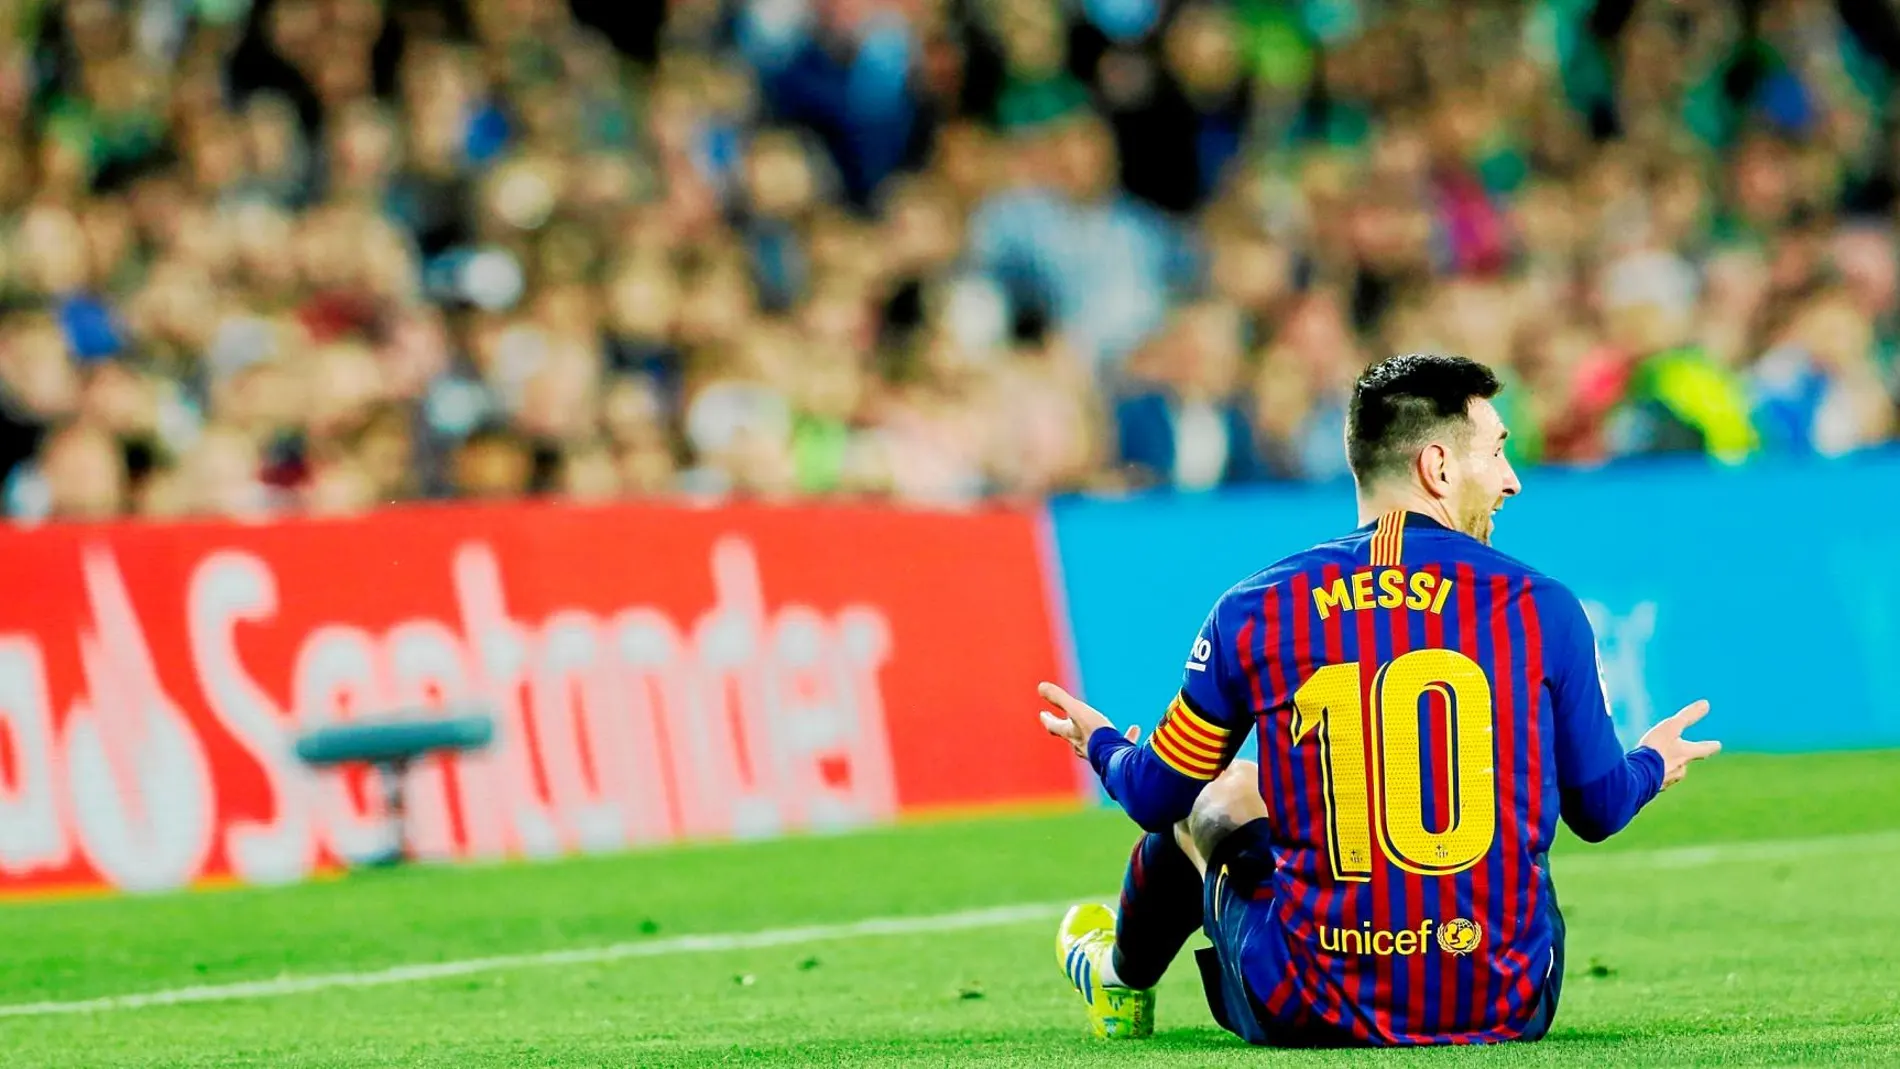 Cara a cara: ¿Volverá a fracasar Messi en la Champions?